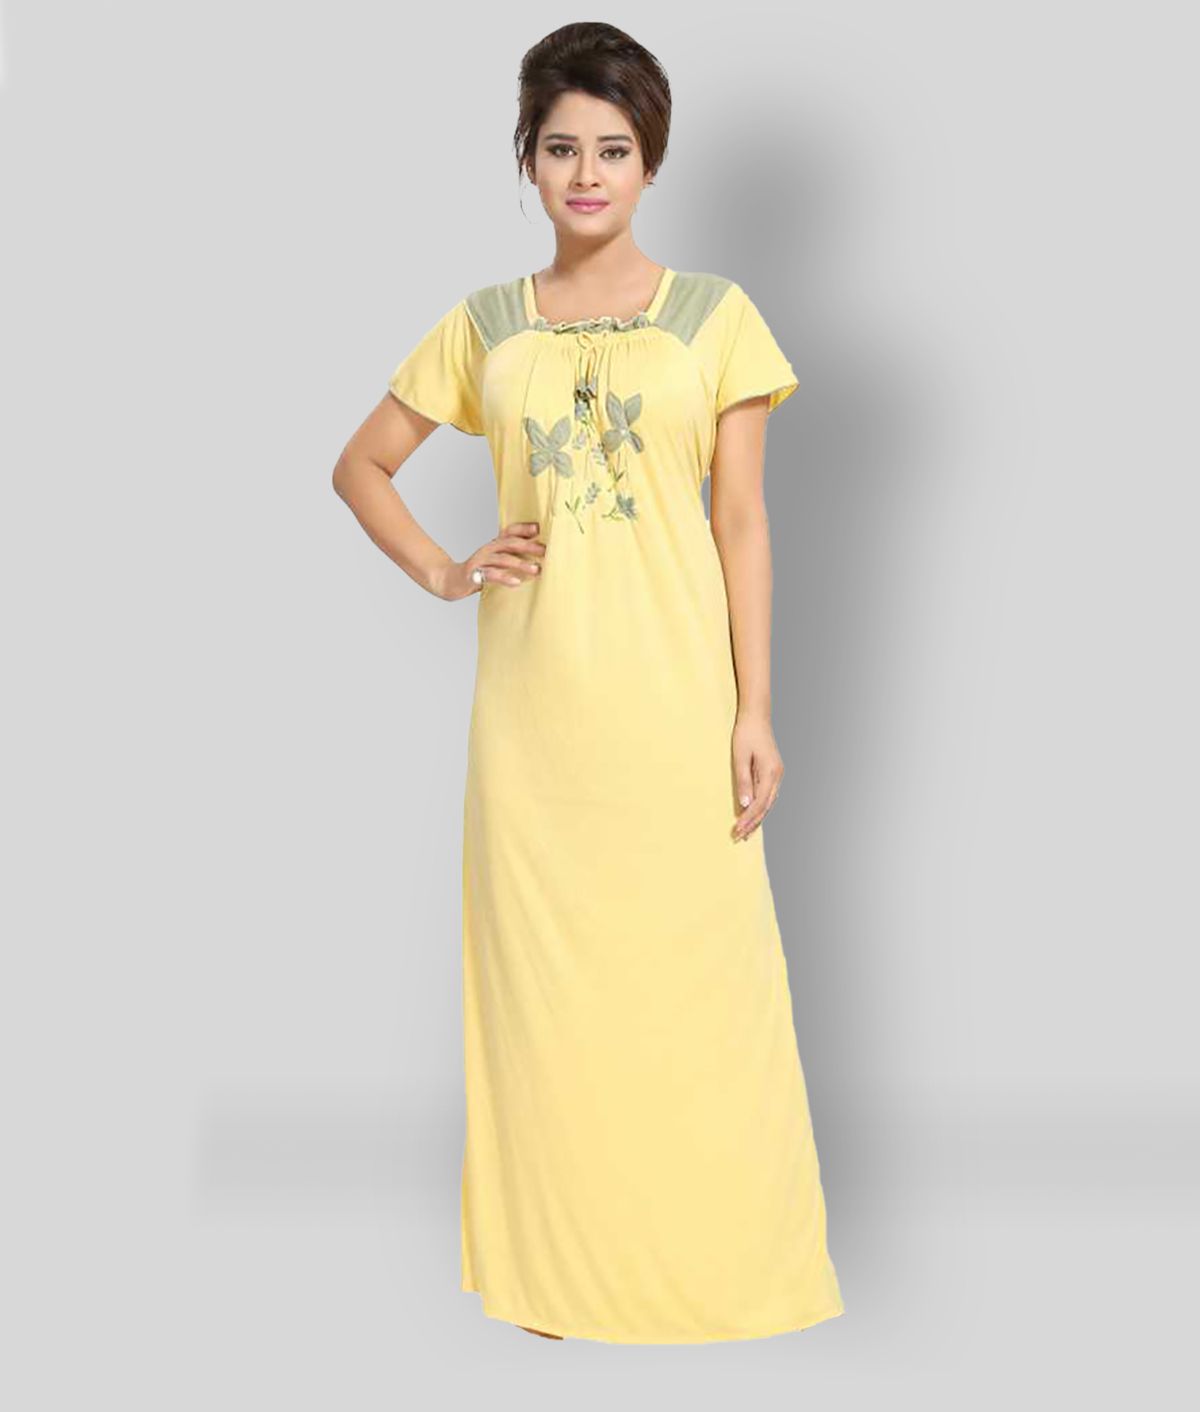     			Gutthi - Yellow Cotton Women's Nightwear Nighty & Night Gowns ( Pack of 1 )